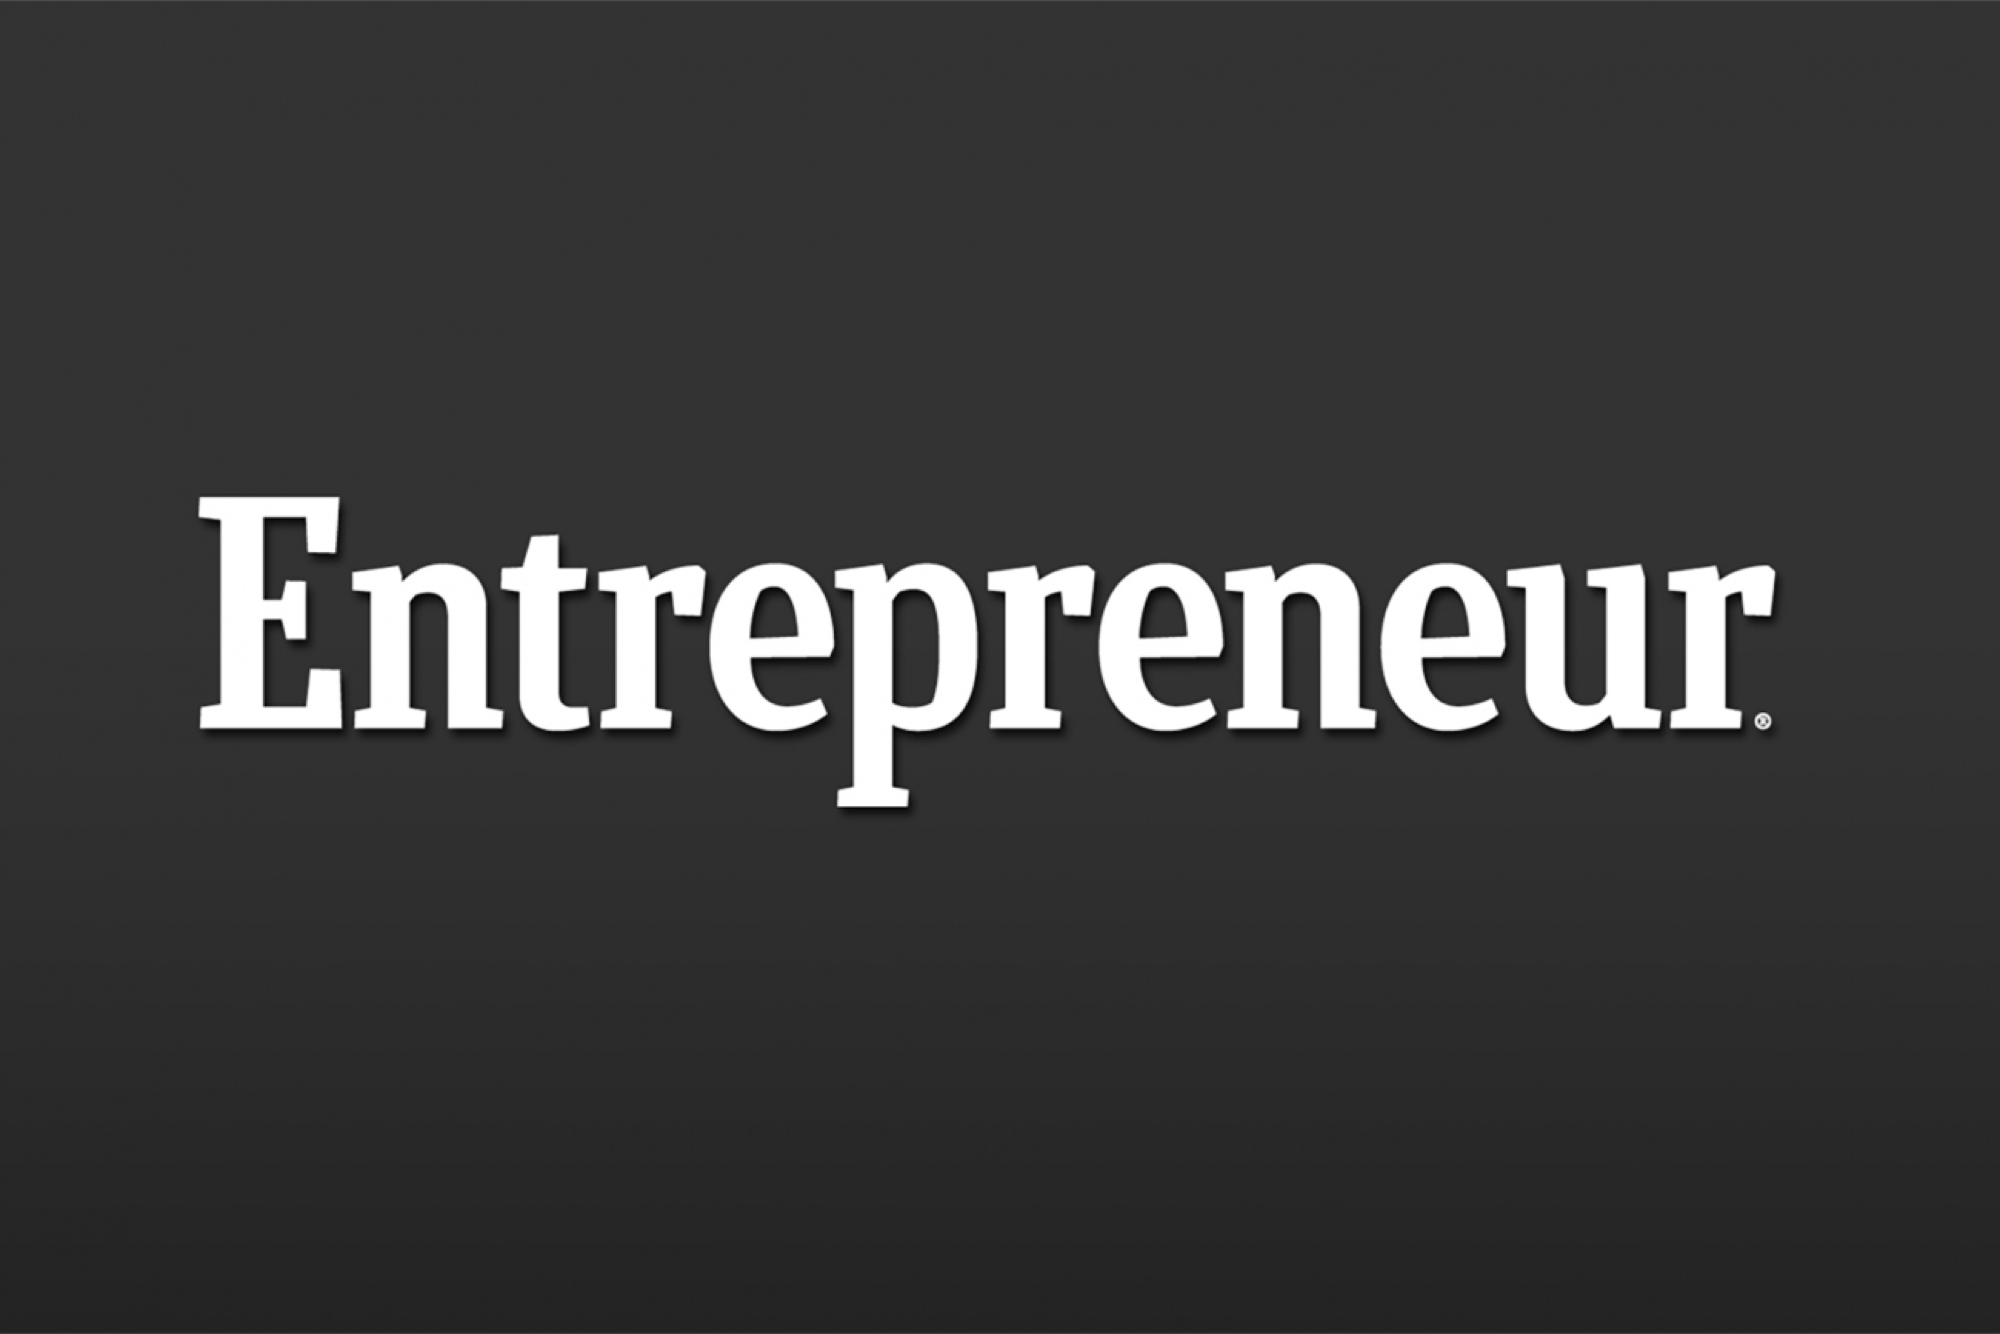 Starting a Business | Entrepreneur